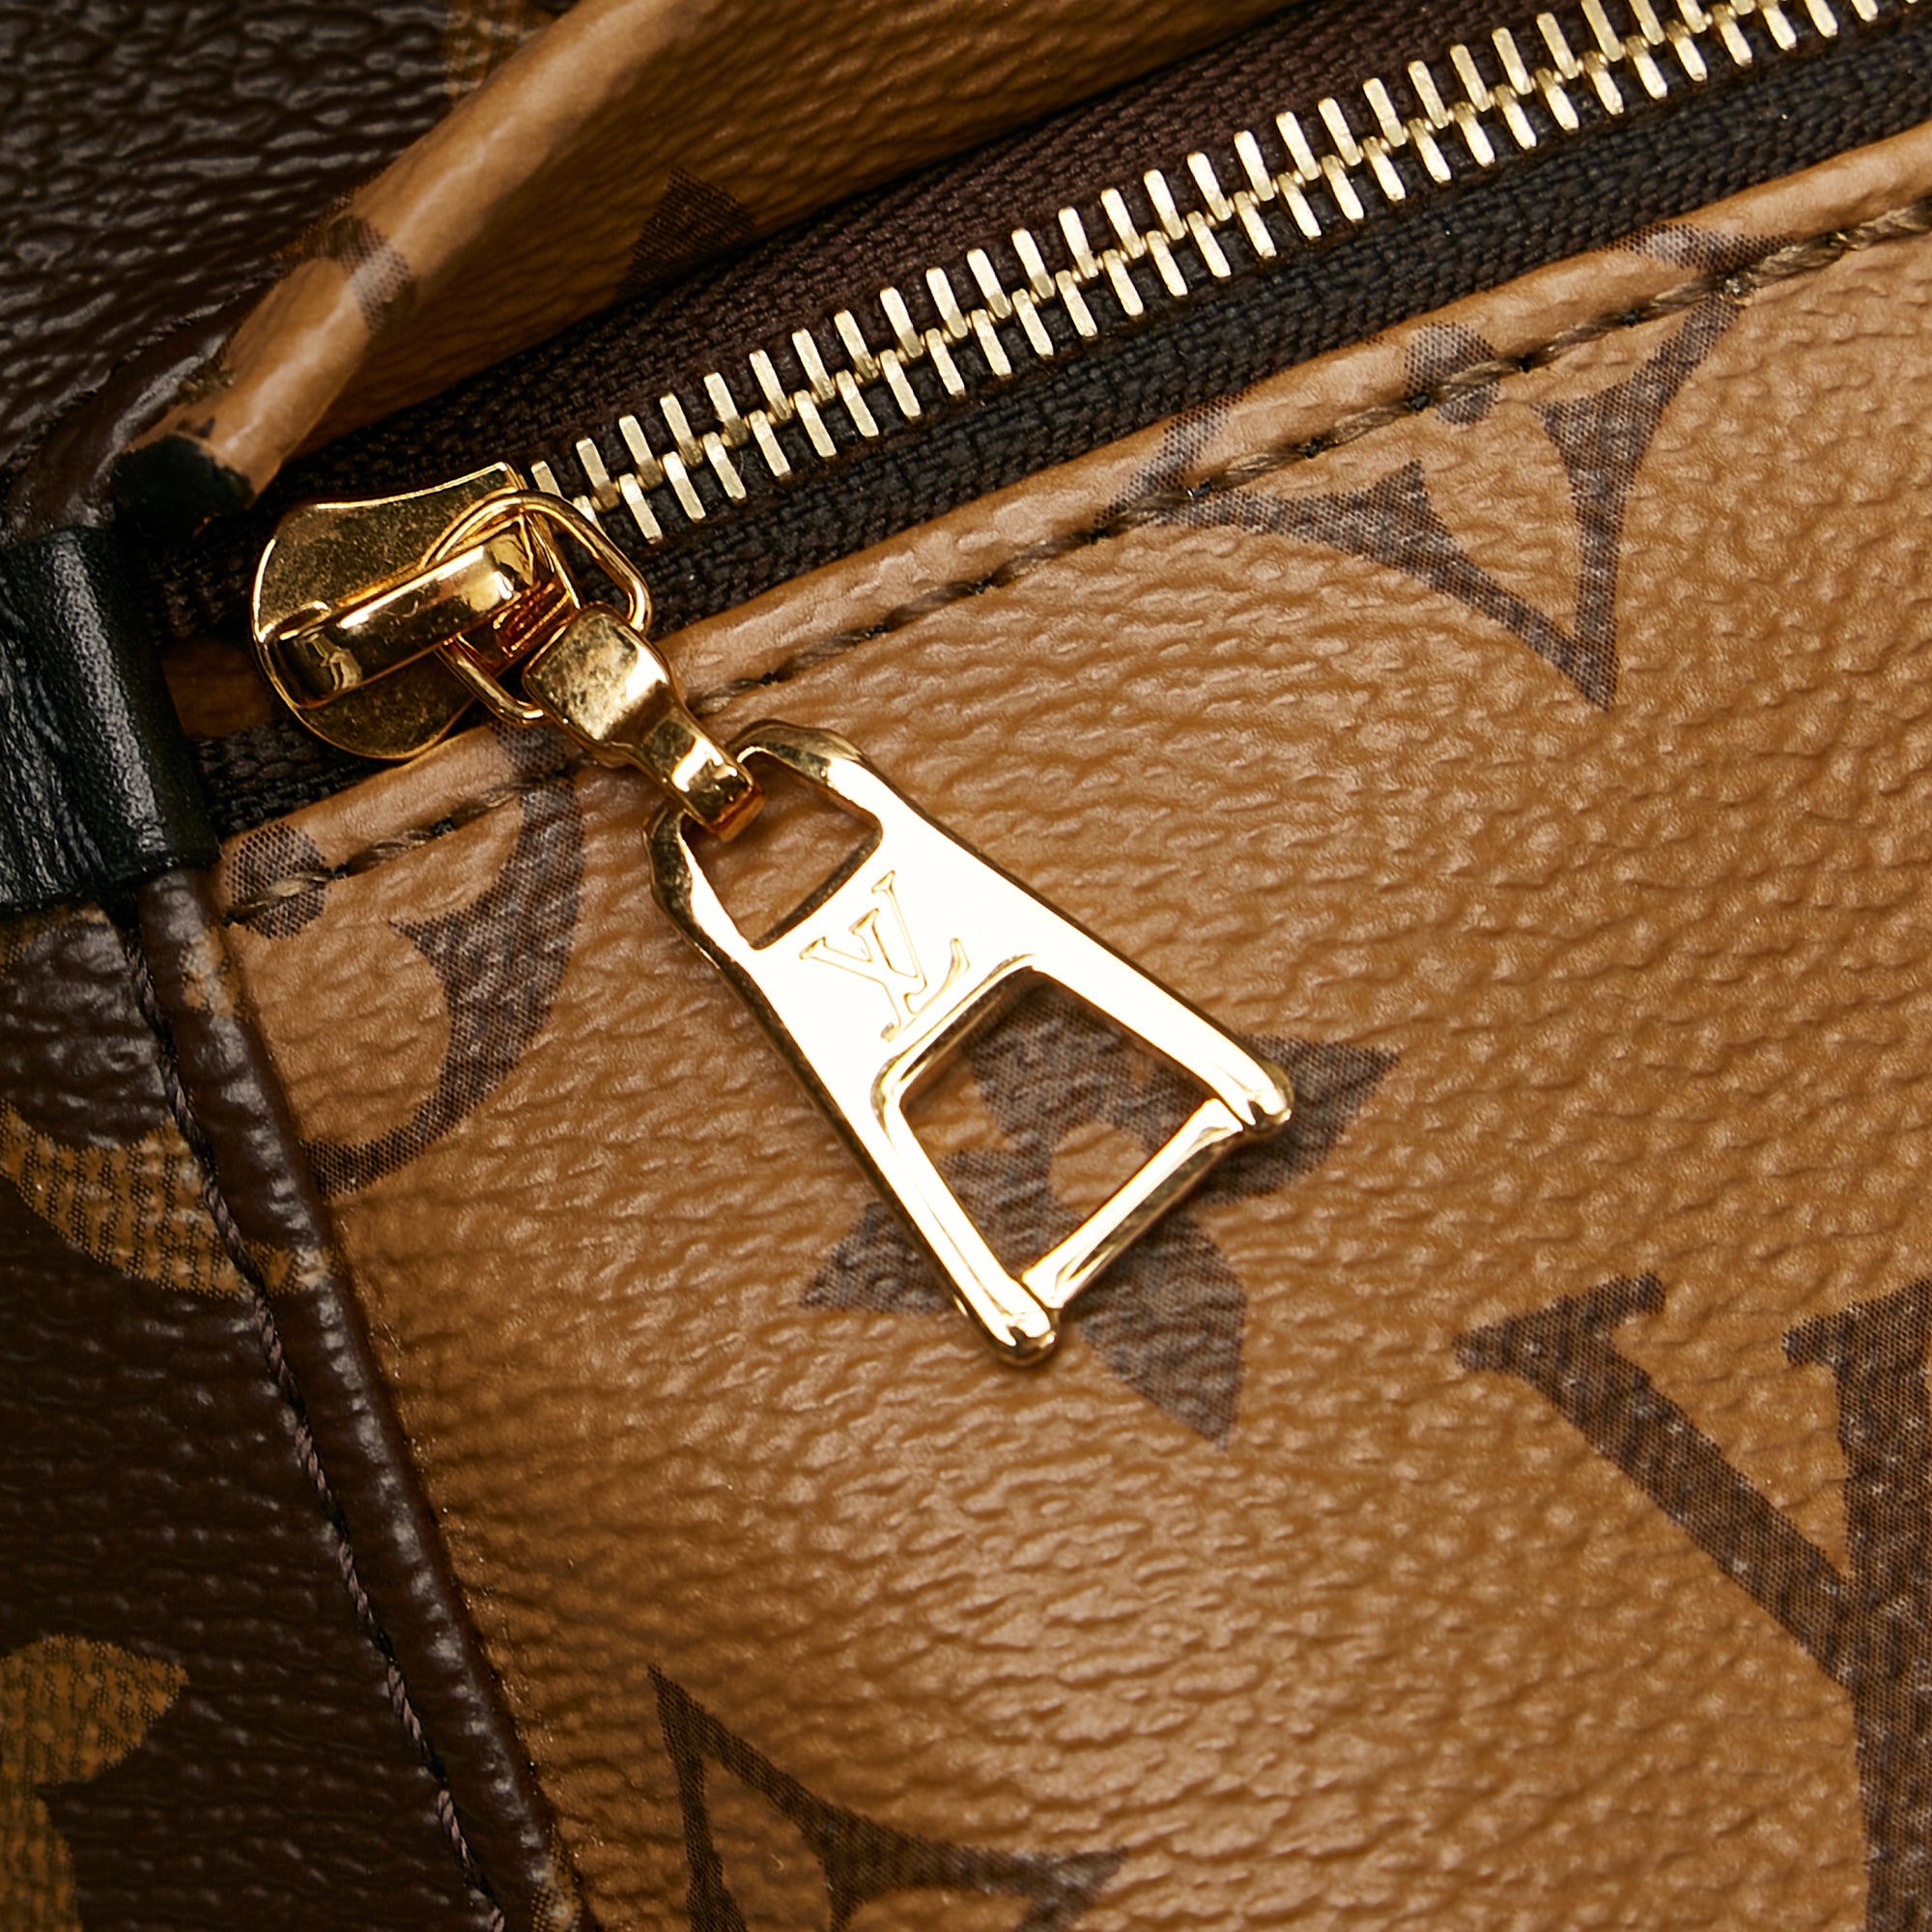 Louis Vuitton Backpack Palm Springs Monogram Reverse PM Brown - GB